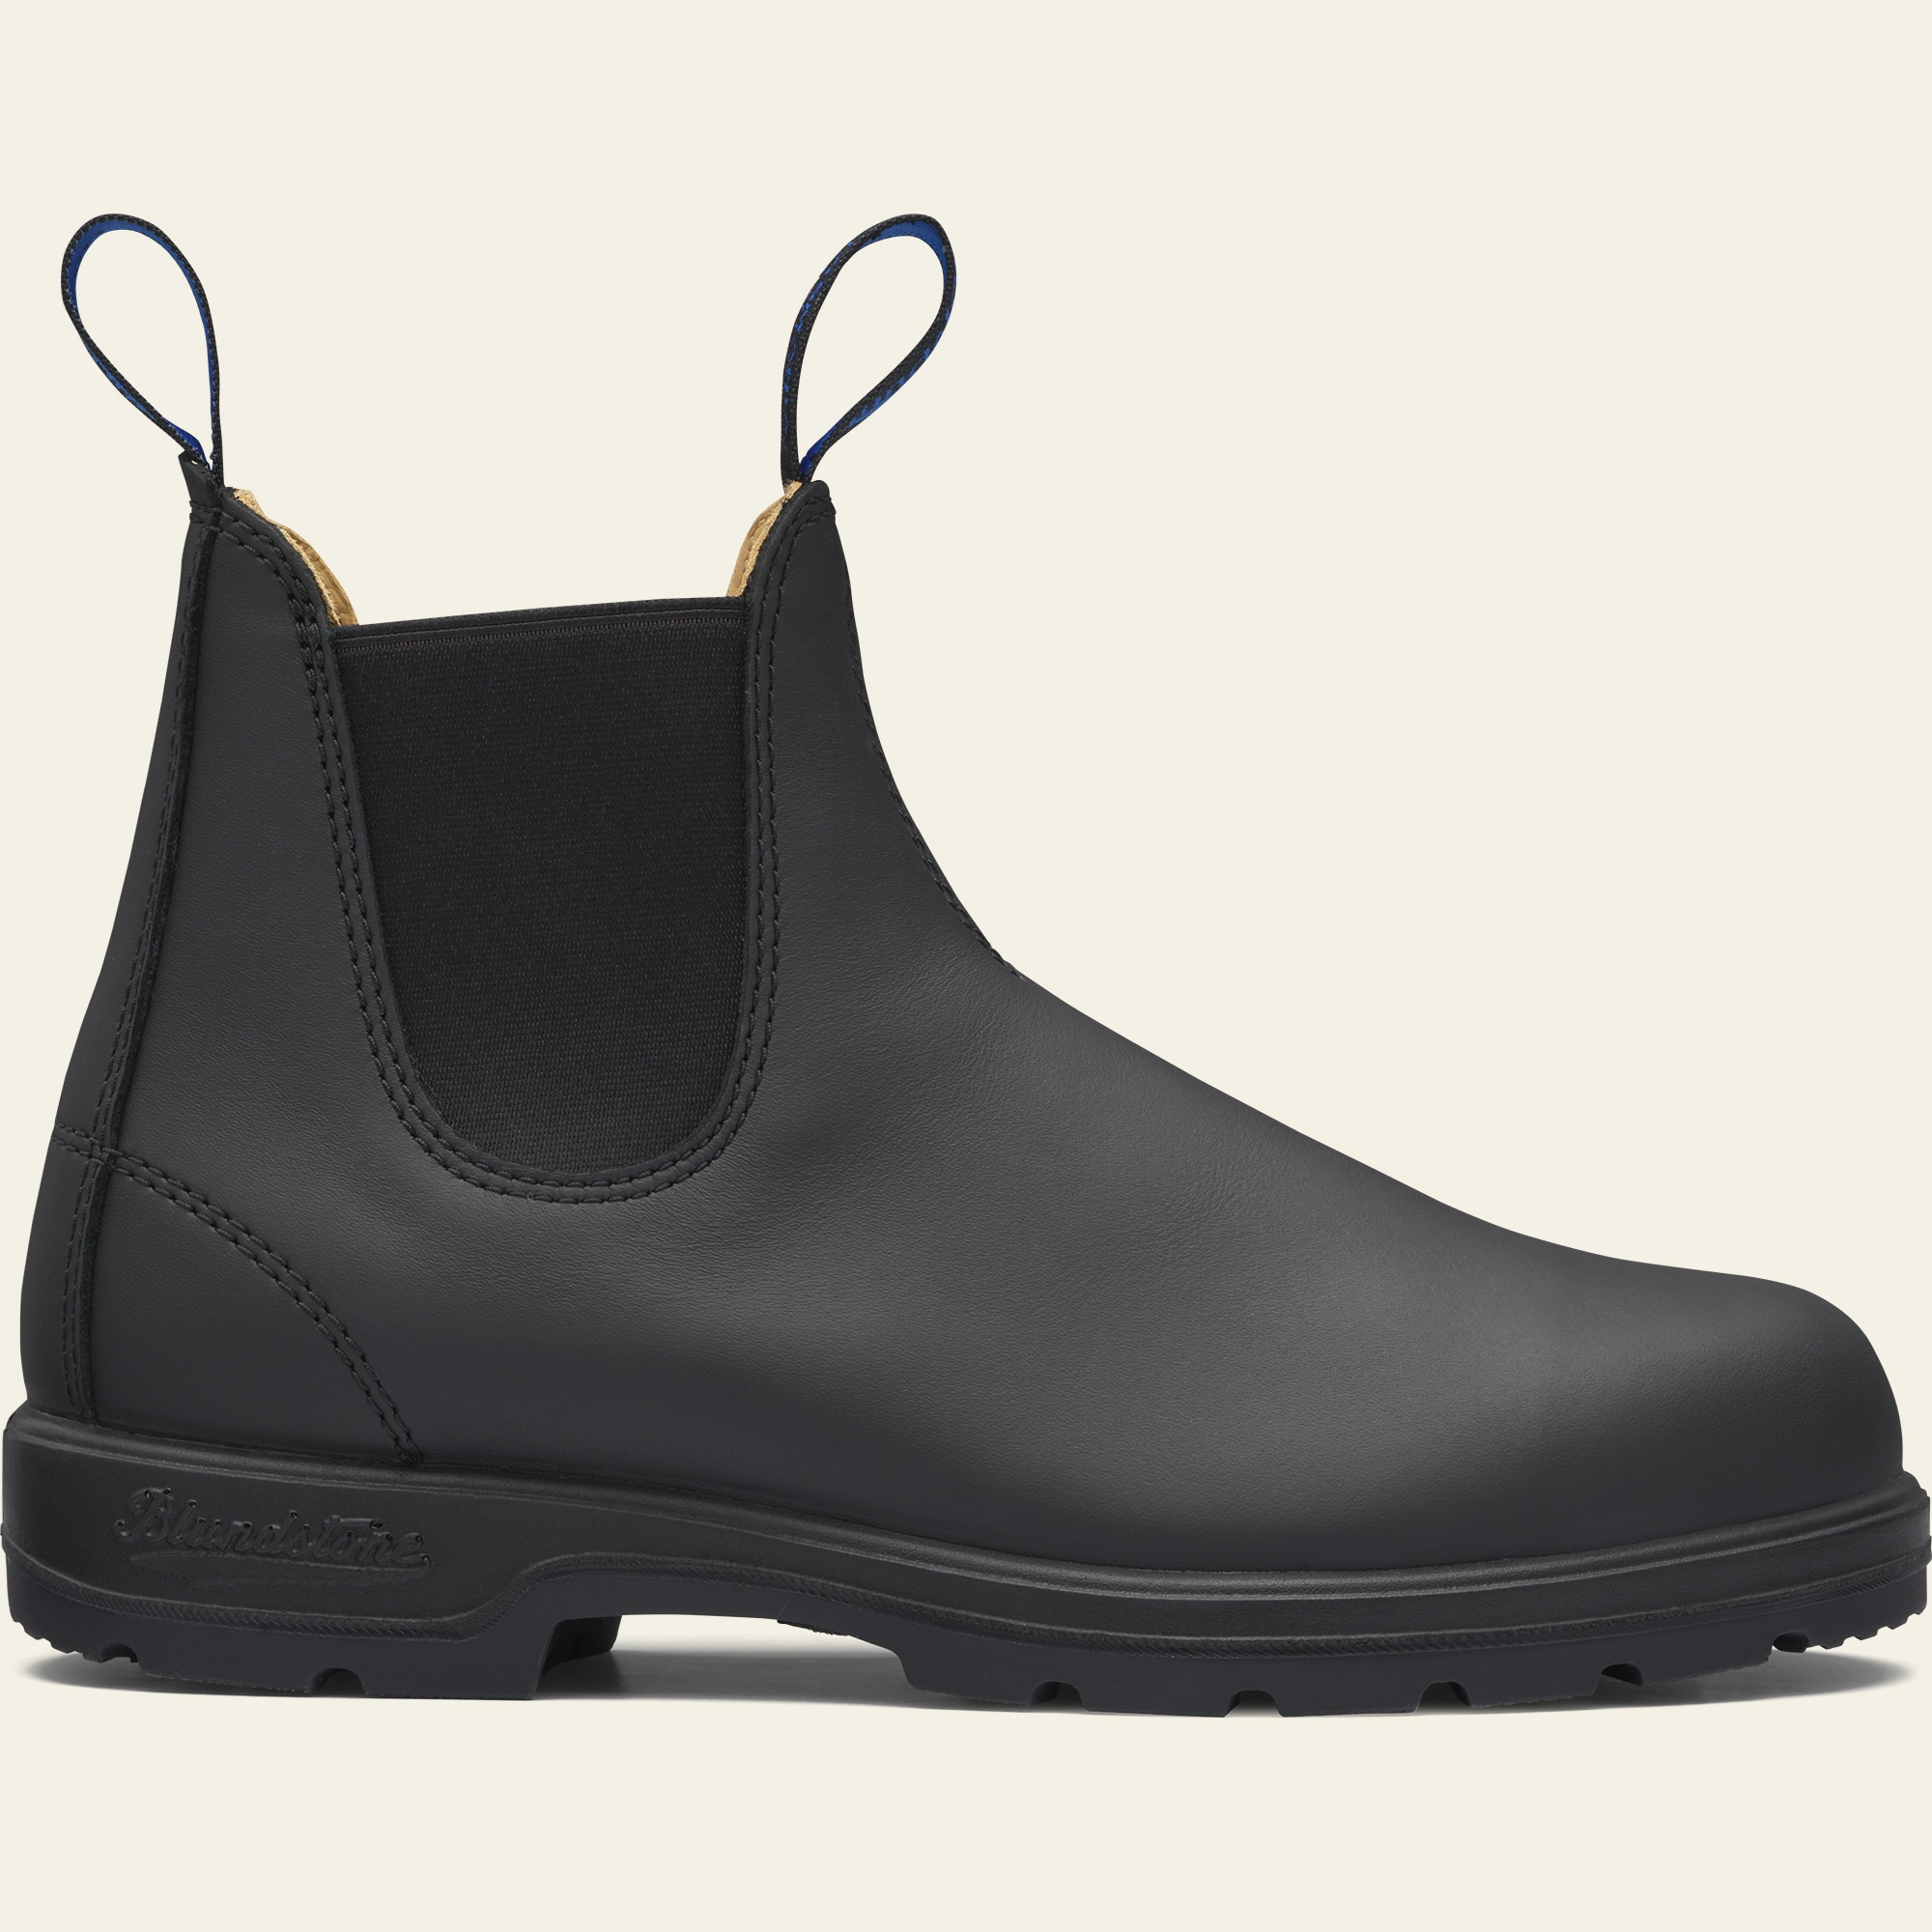 Black Premium Waterproof Leather Chelsea Boots, Women's Style 566 -  Blundstone USA